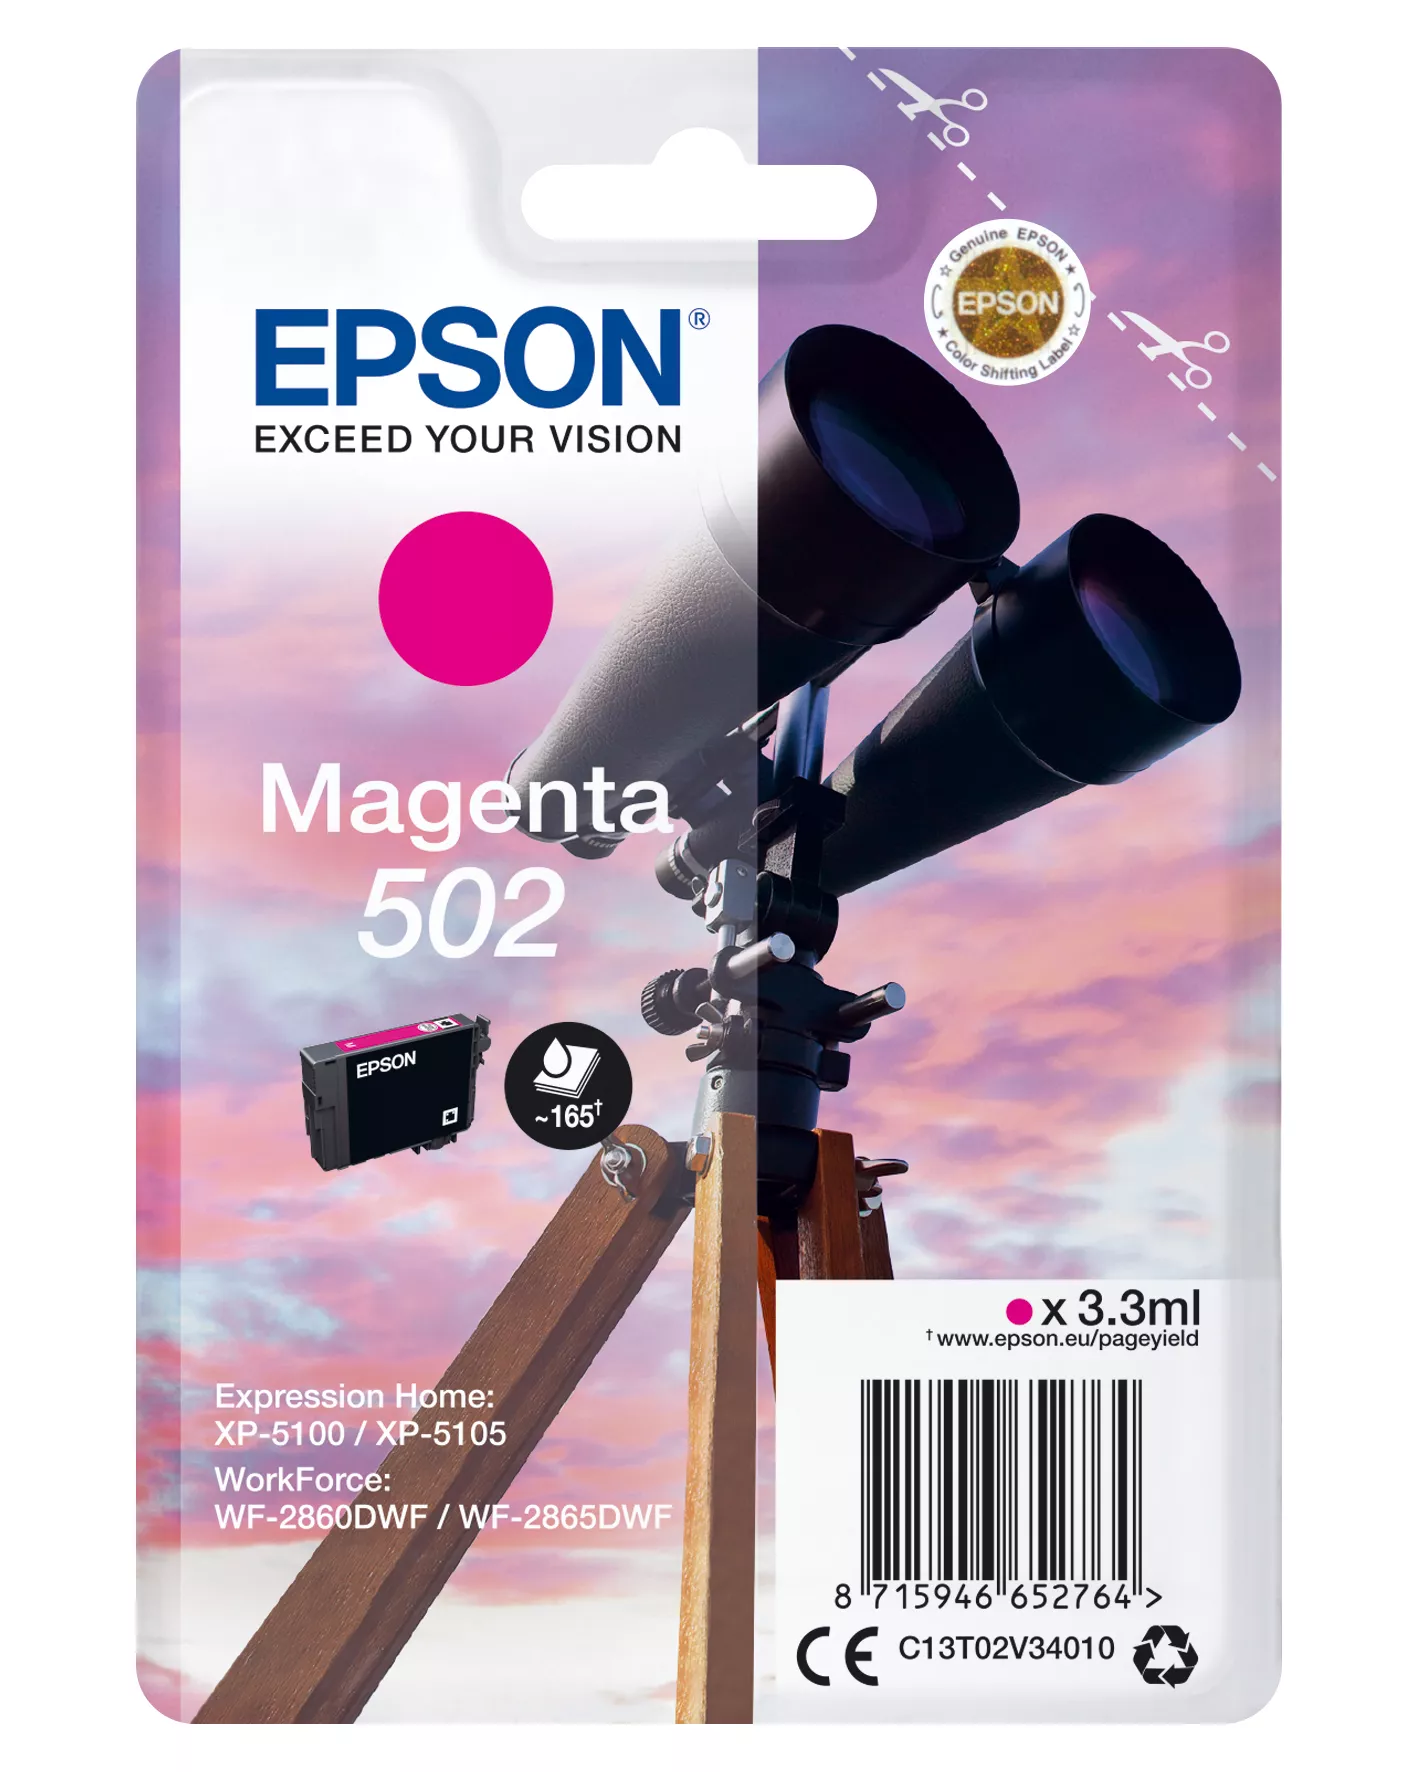 Vente EPSON Singlepack Magenta 502 Ink SEC au meilleur prix